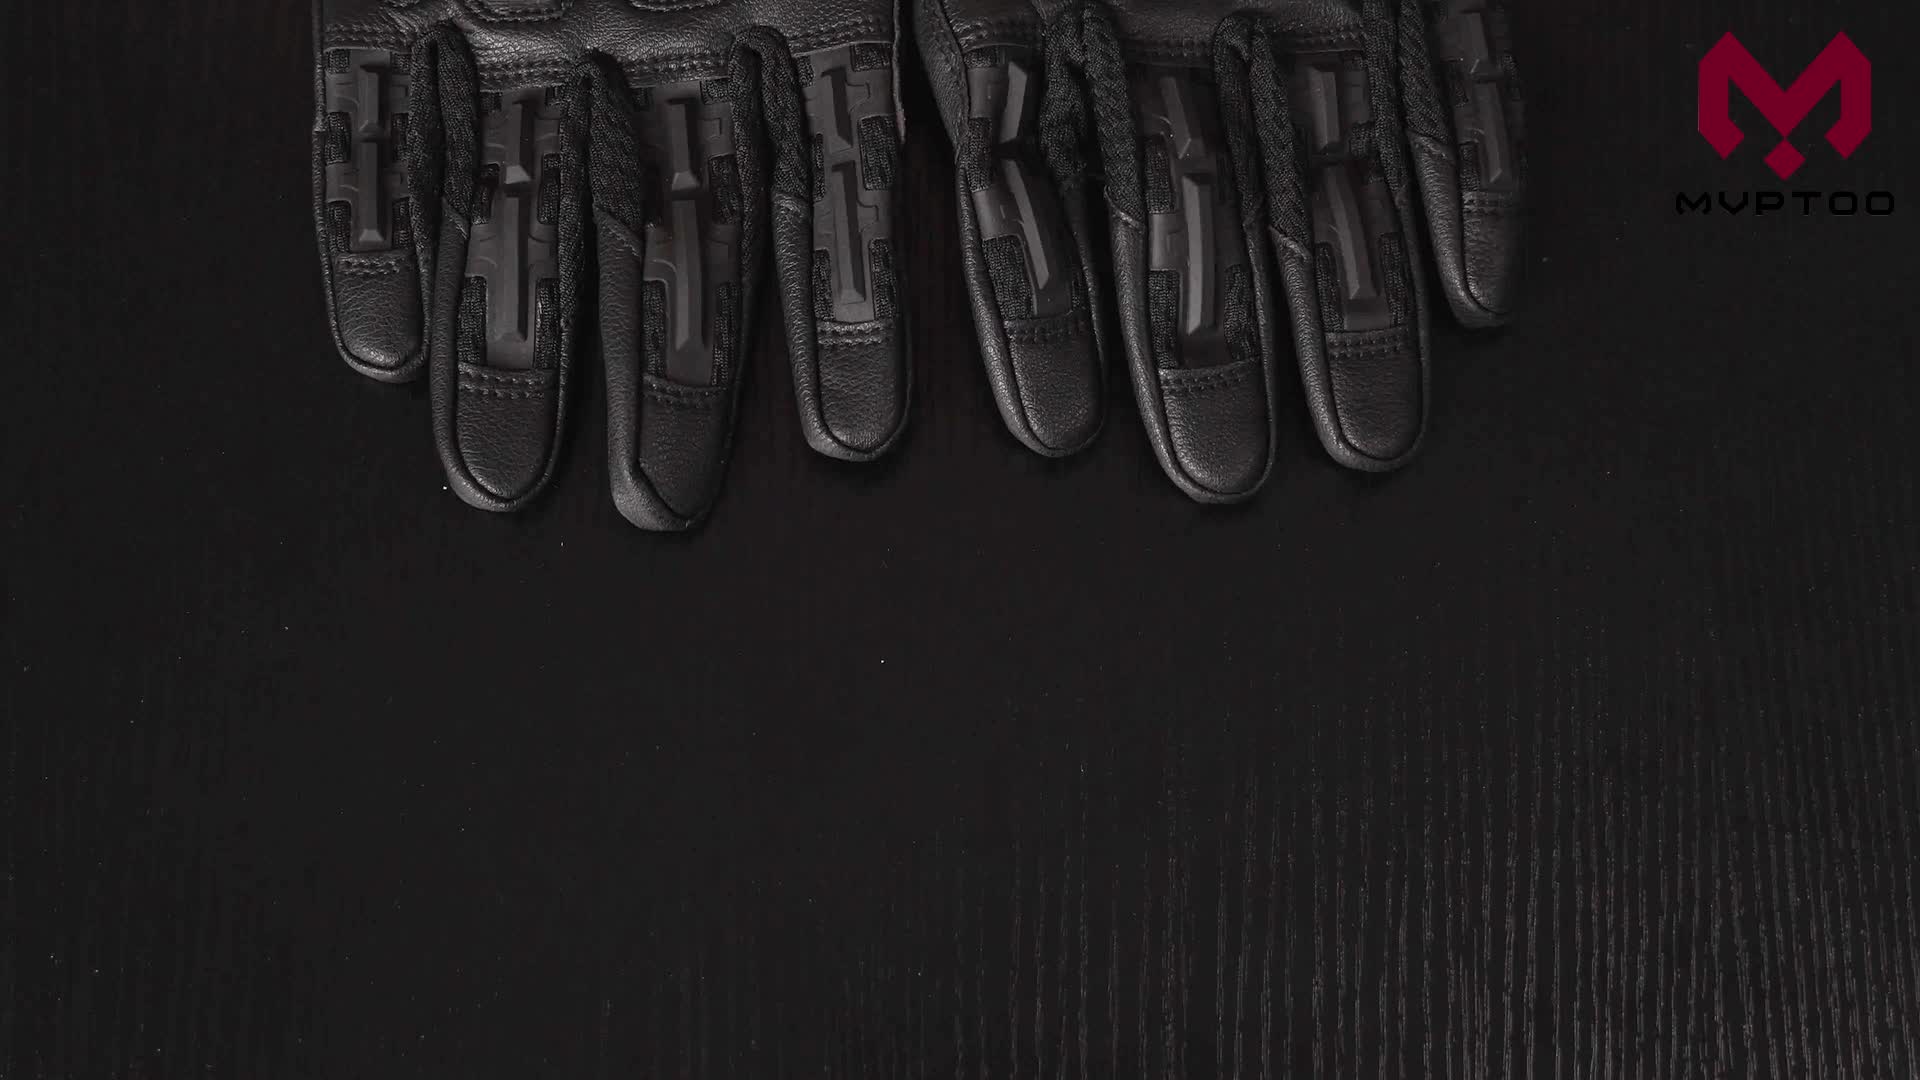 Zune Lotoo Touchscreen Tactical Gloves Full Finger, TPR Impact Protective,  Kevlar Lined, EVA Palm Padding, Safety Work Gloves for Men Women Airsoft  Shooting Range Paintball Motorcycle black zag6 full finger Medium